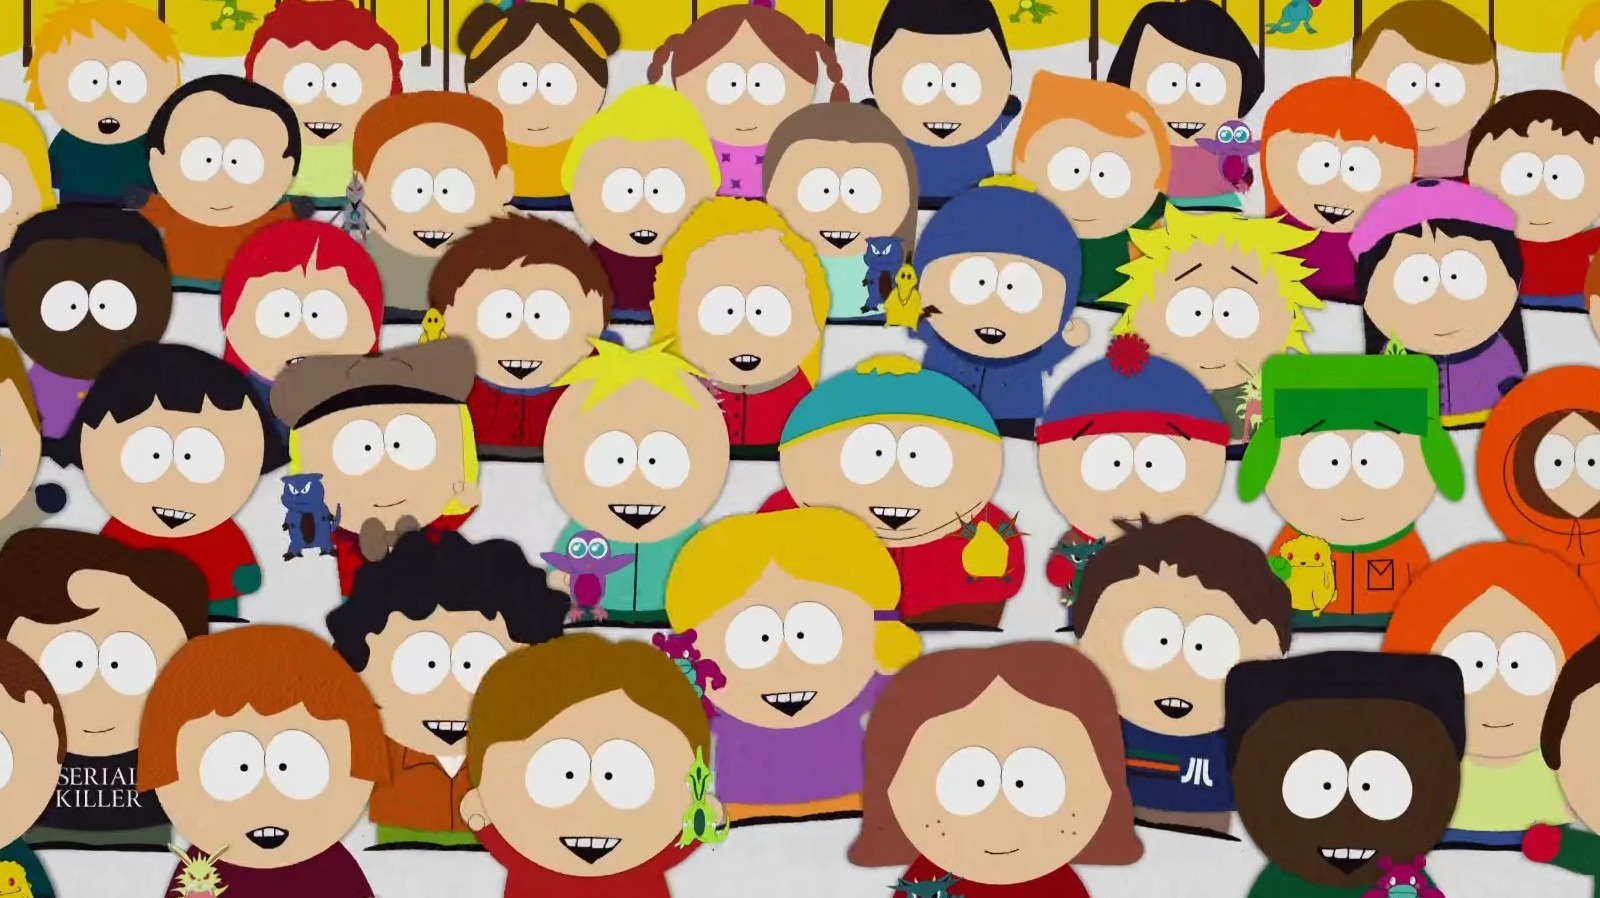 South Park - Season 18 - TV Series